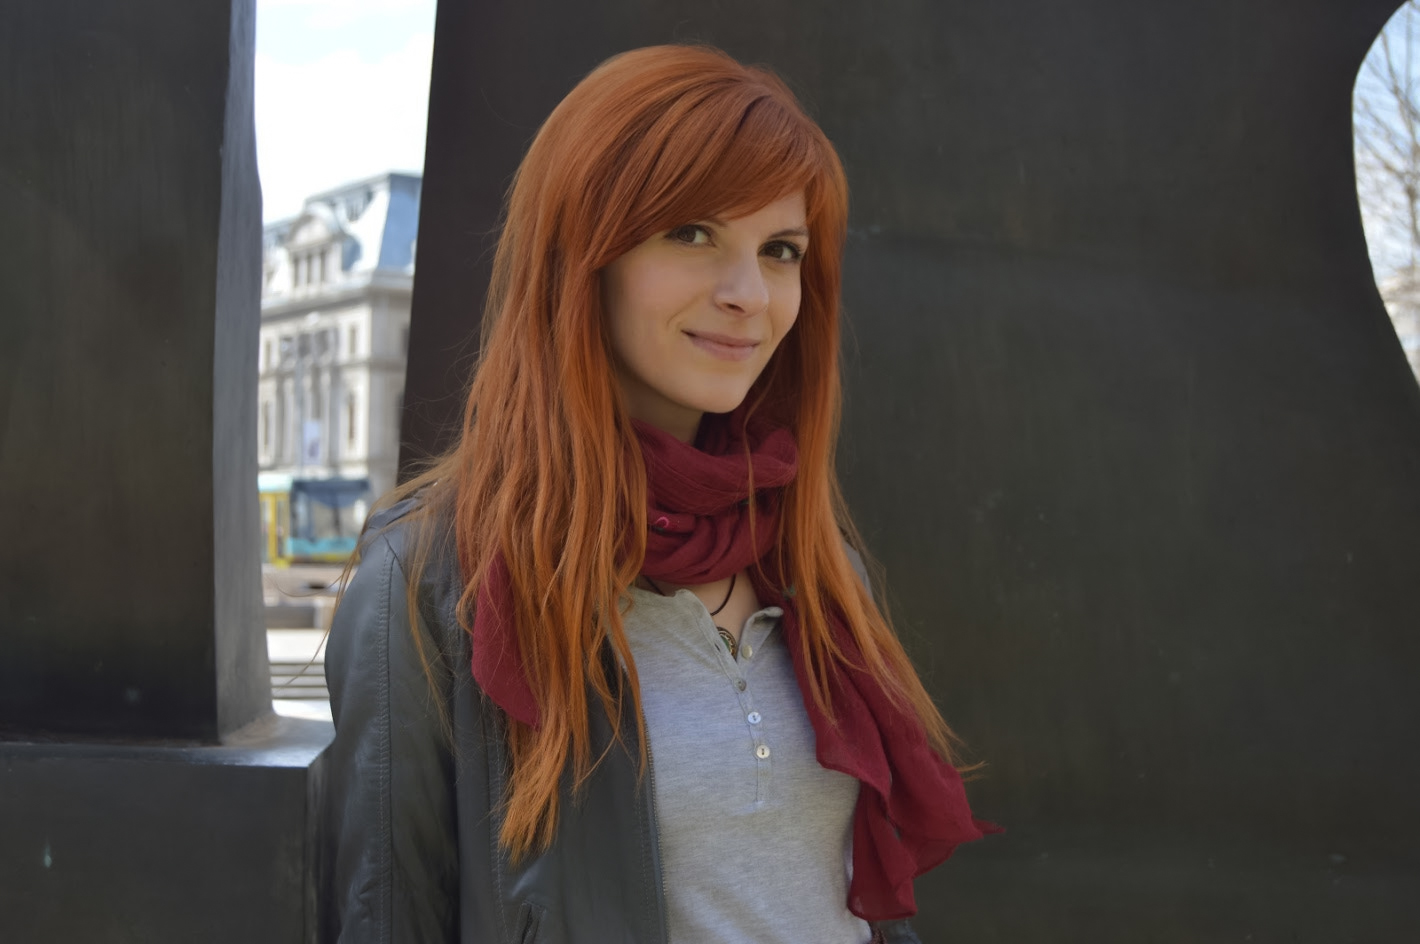 Alexandru Botez Women Redhead Long Hair Looking At Viewer Scarf Jacket Smiling Outdoors 1420x944